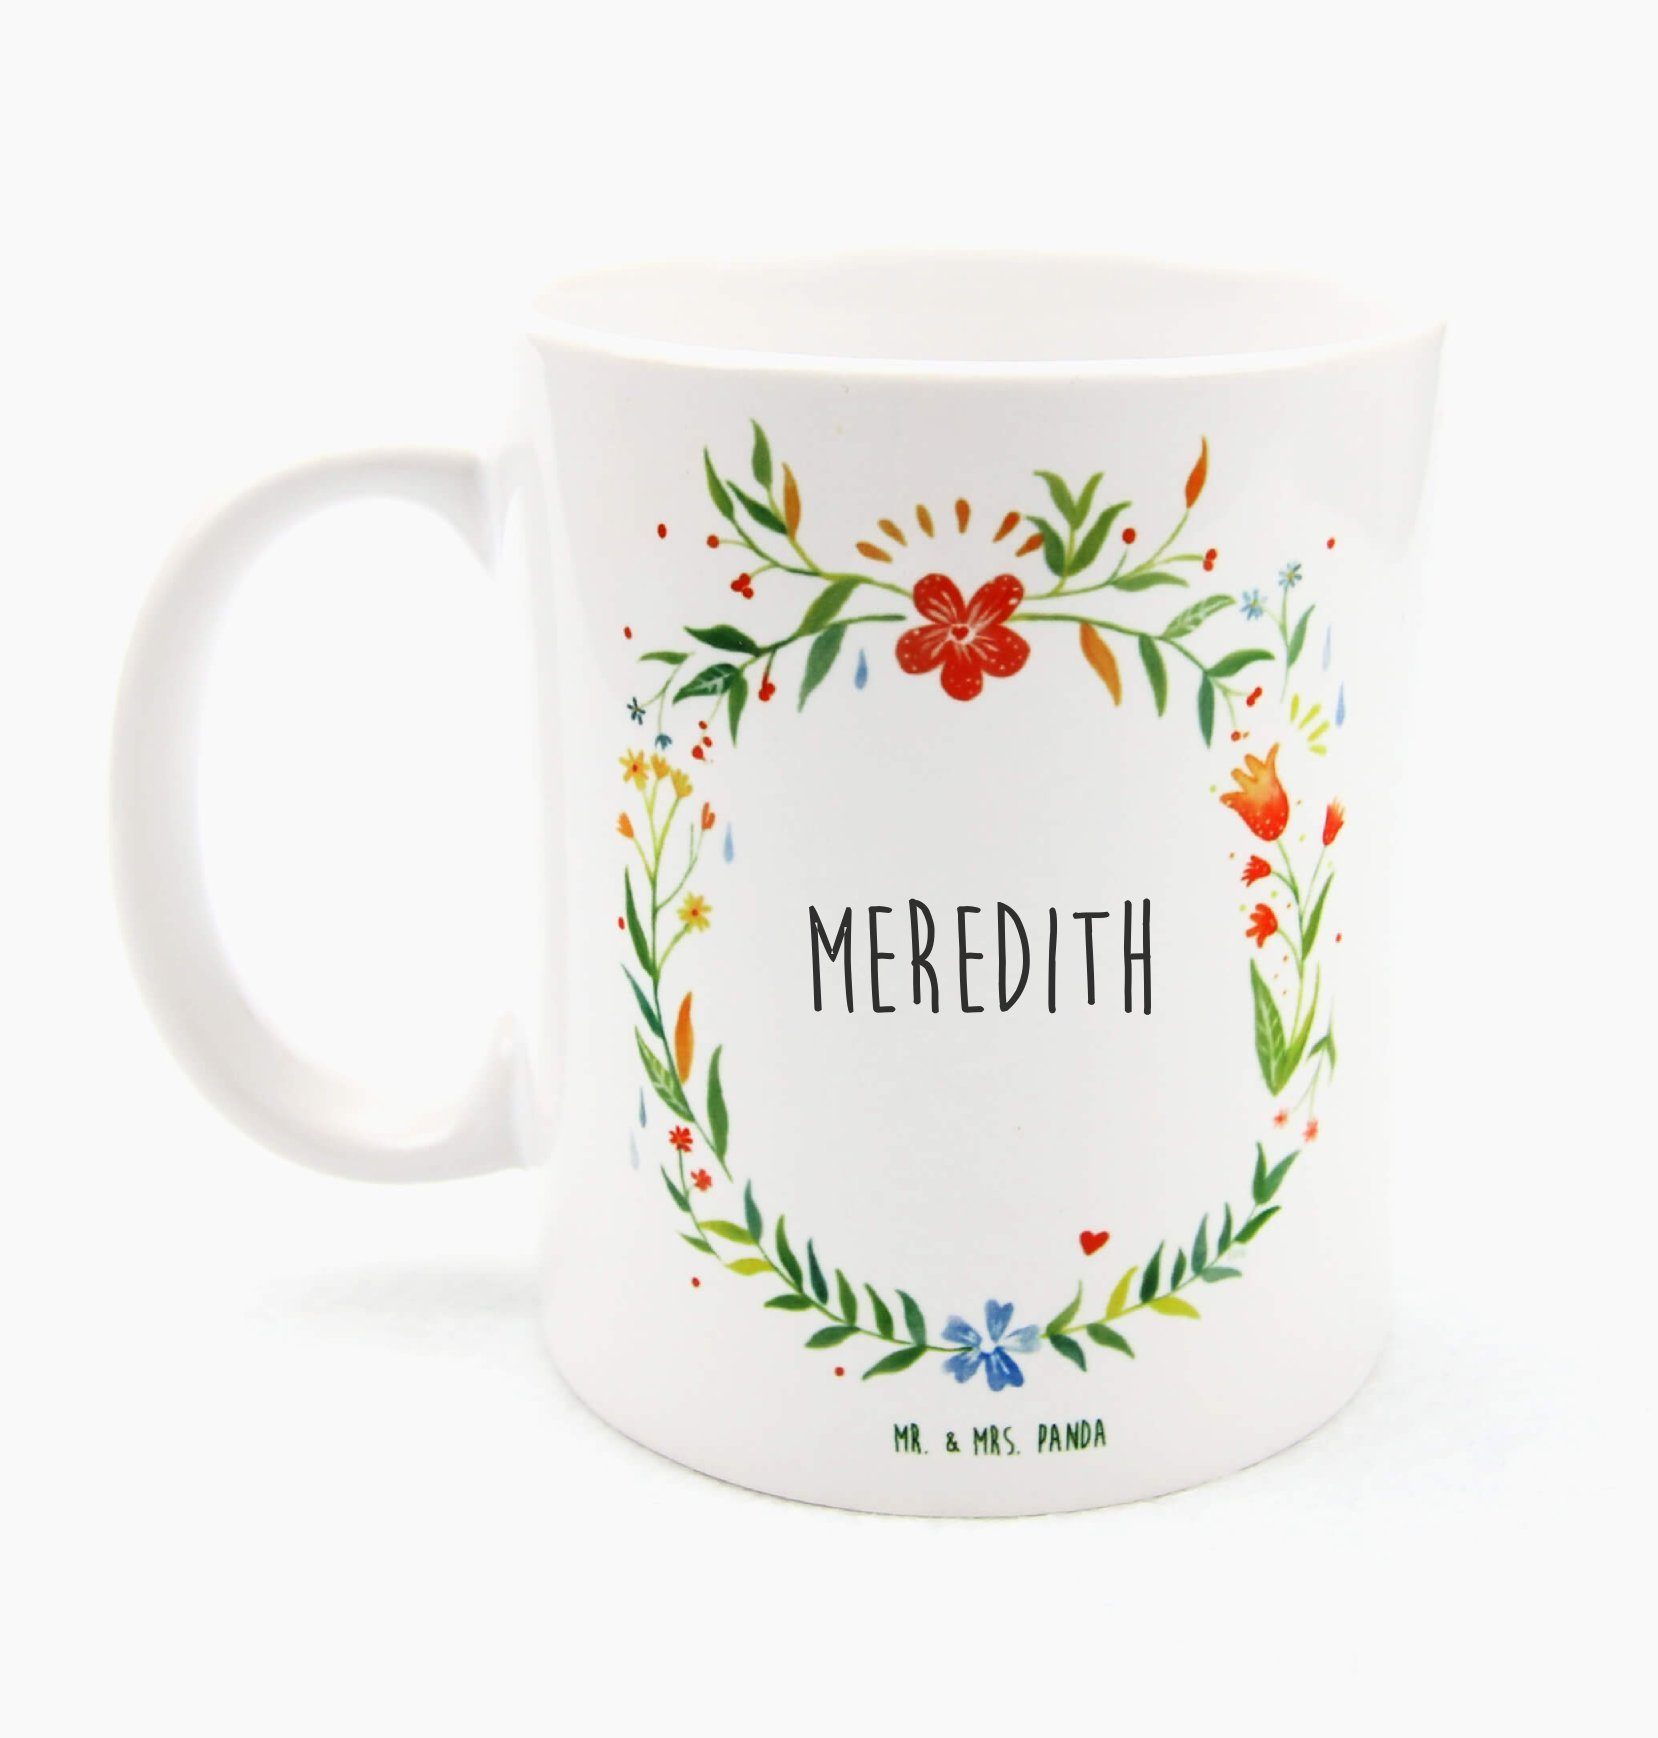 Mr. & Mrs. Panda Tasse Meredith - Geschenk, Tasse Motive, Teebecher, Teetasse, Tasse, Kaffee, Keramik